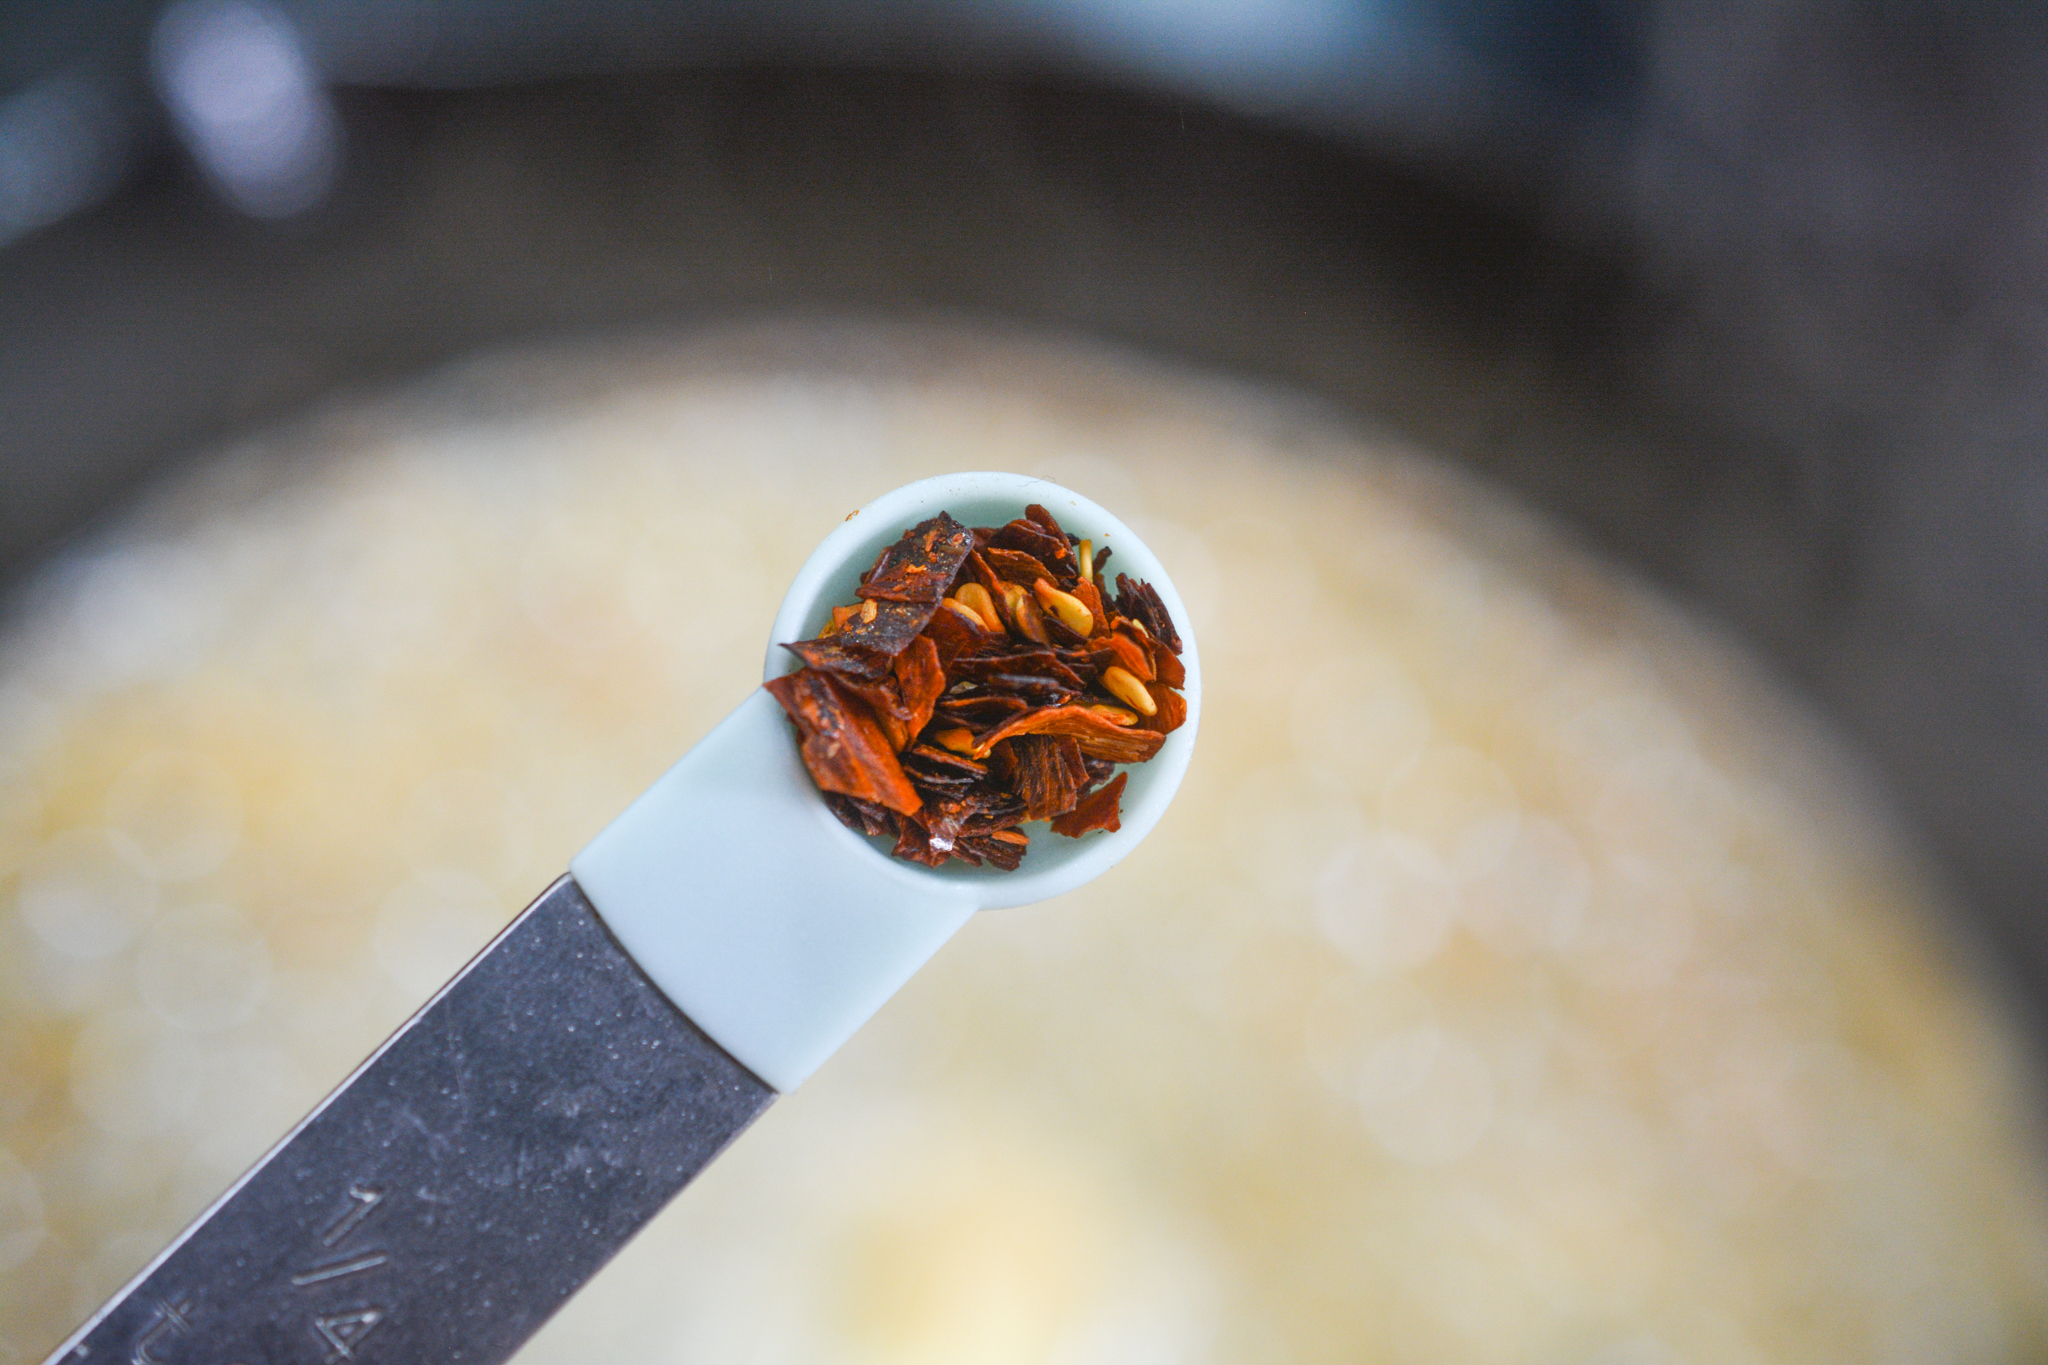 Chicken and Garlic Parmesan Rice Recipe